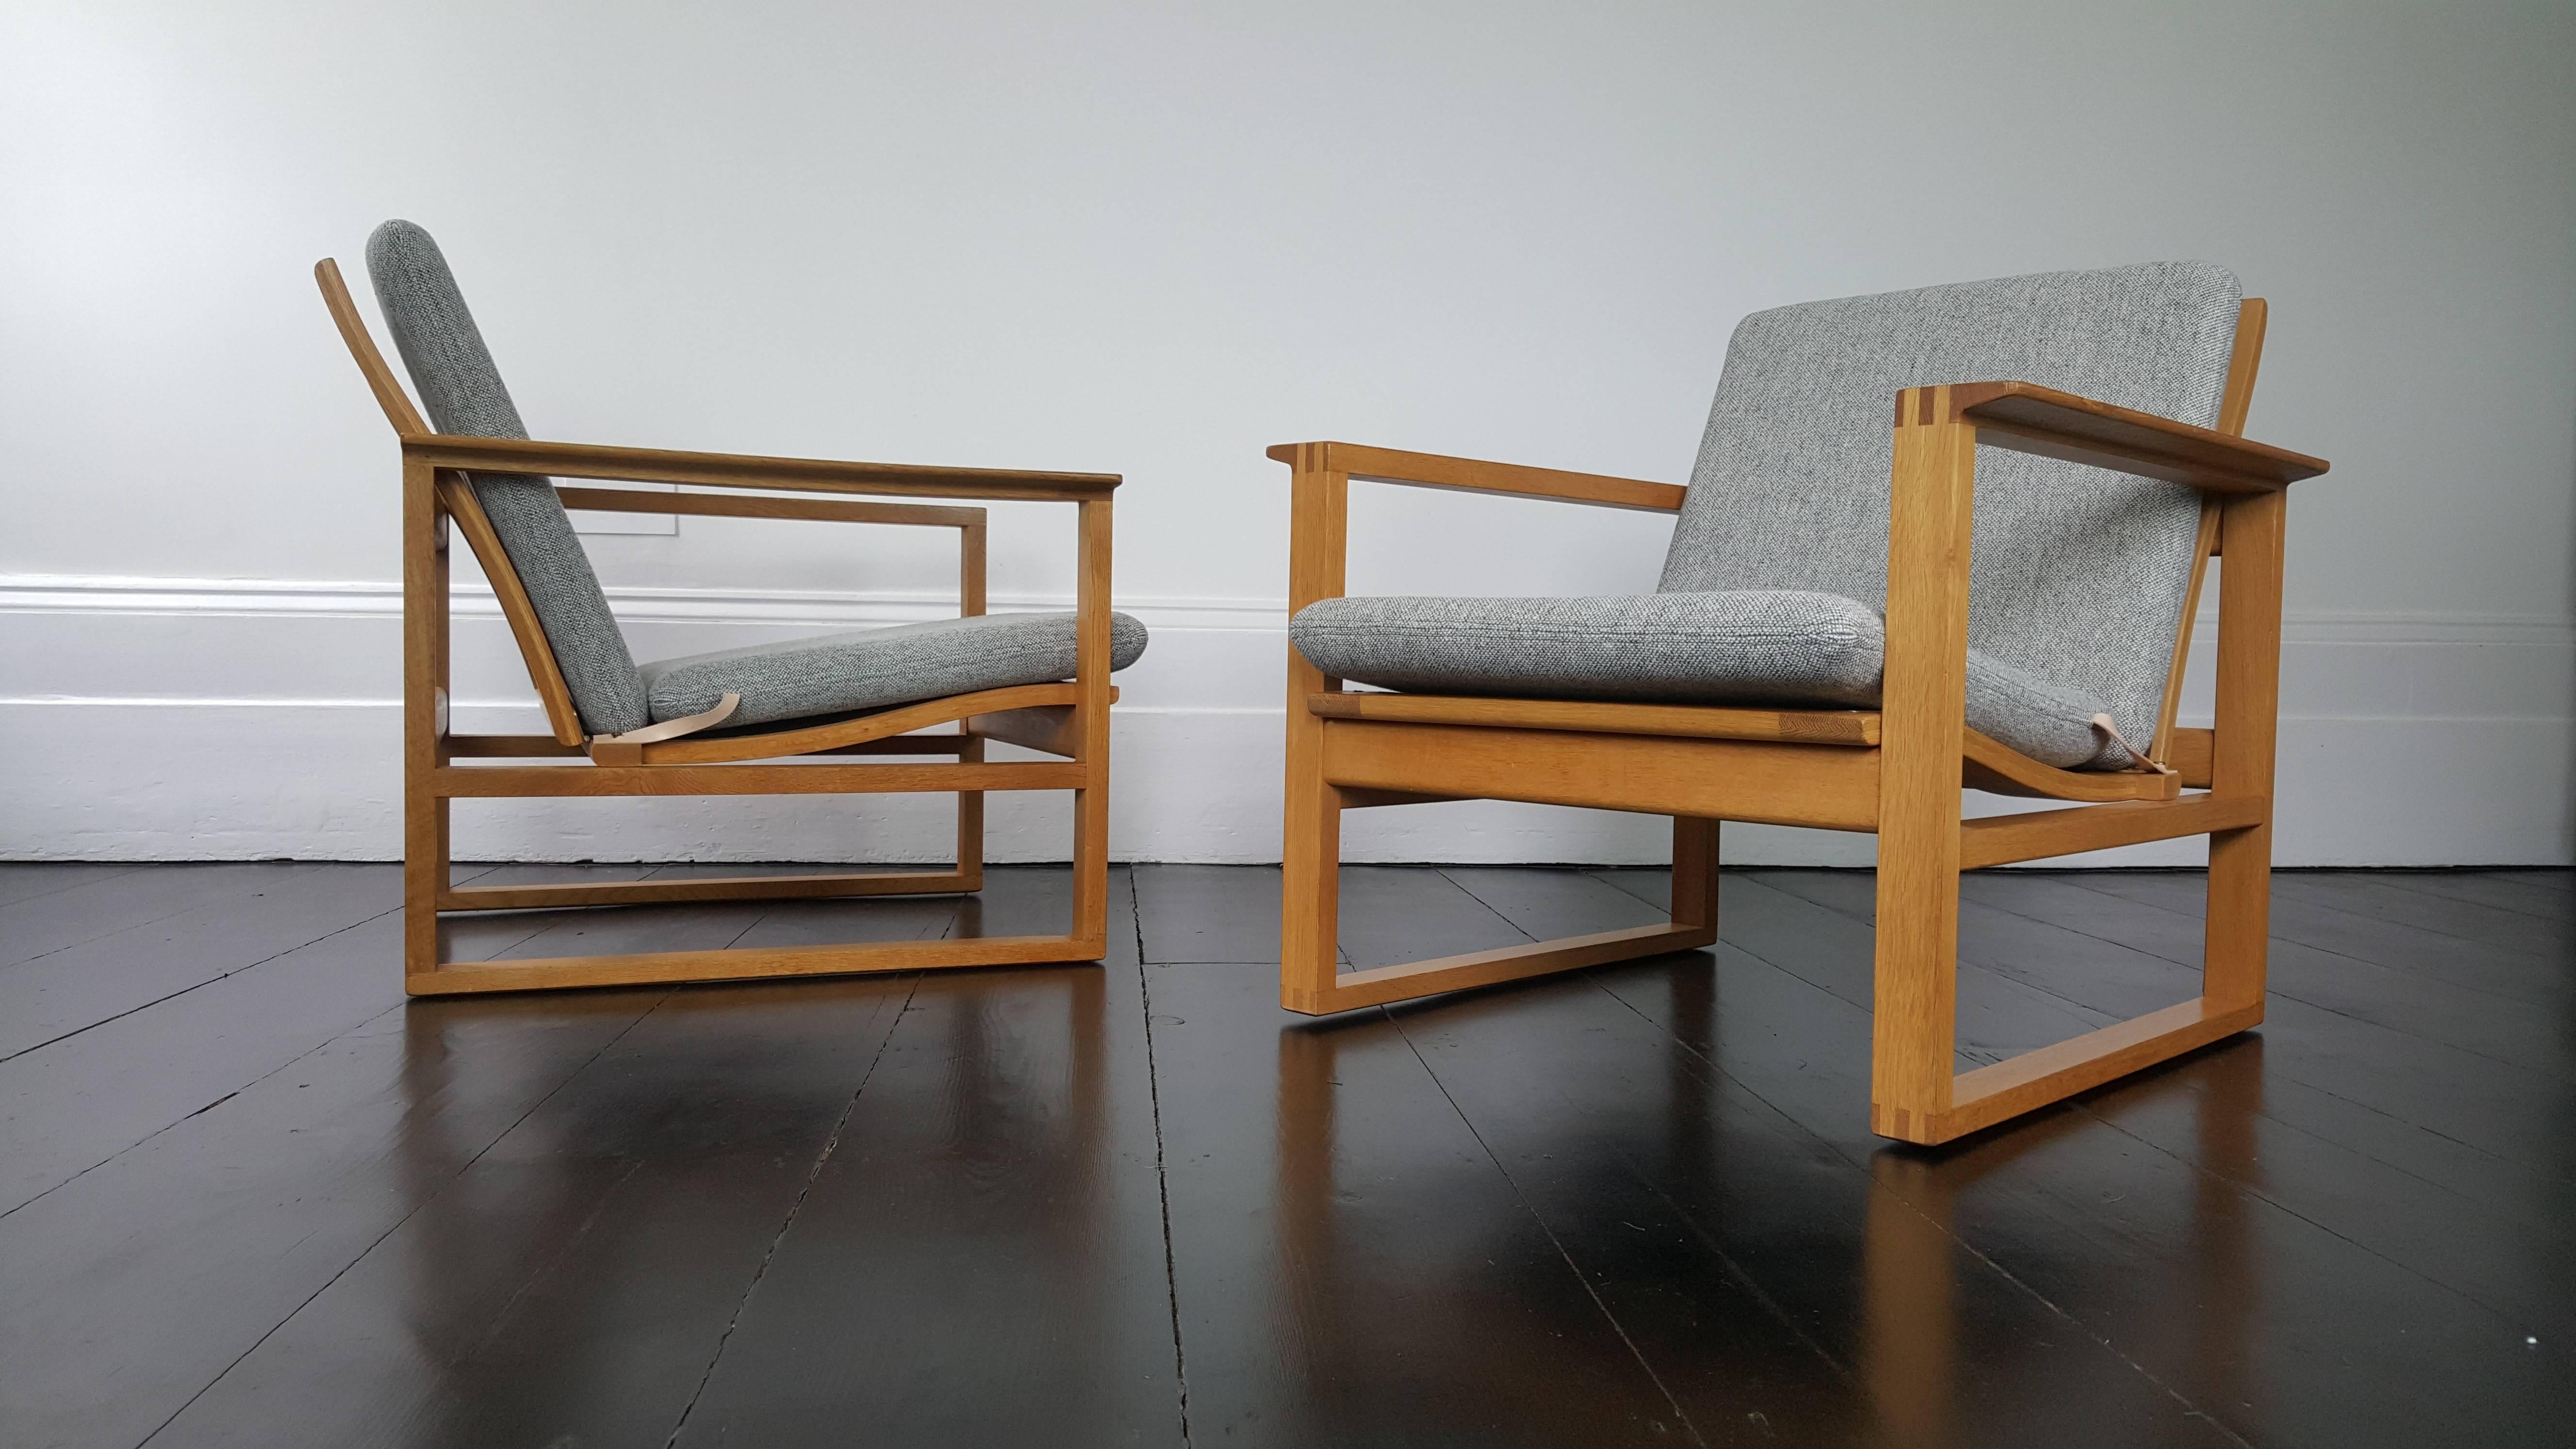 20th Century Børge Mogensen Oak Lounge Sled Chairs Designed 1956 for Frederica Stolefabrik